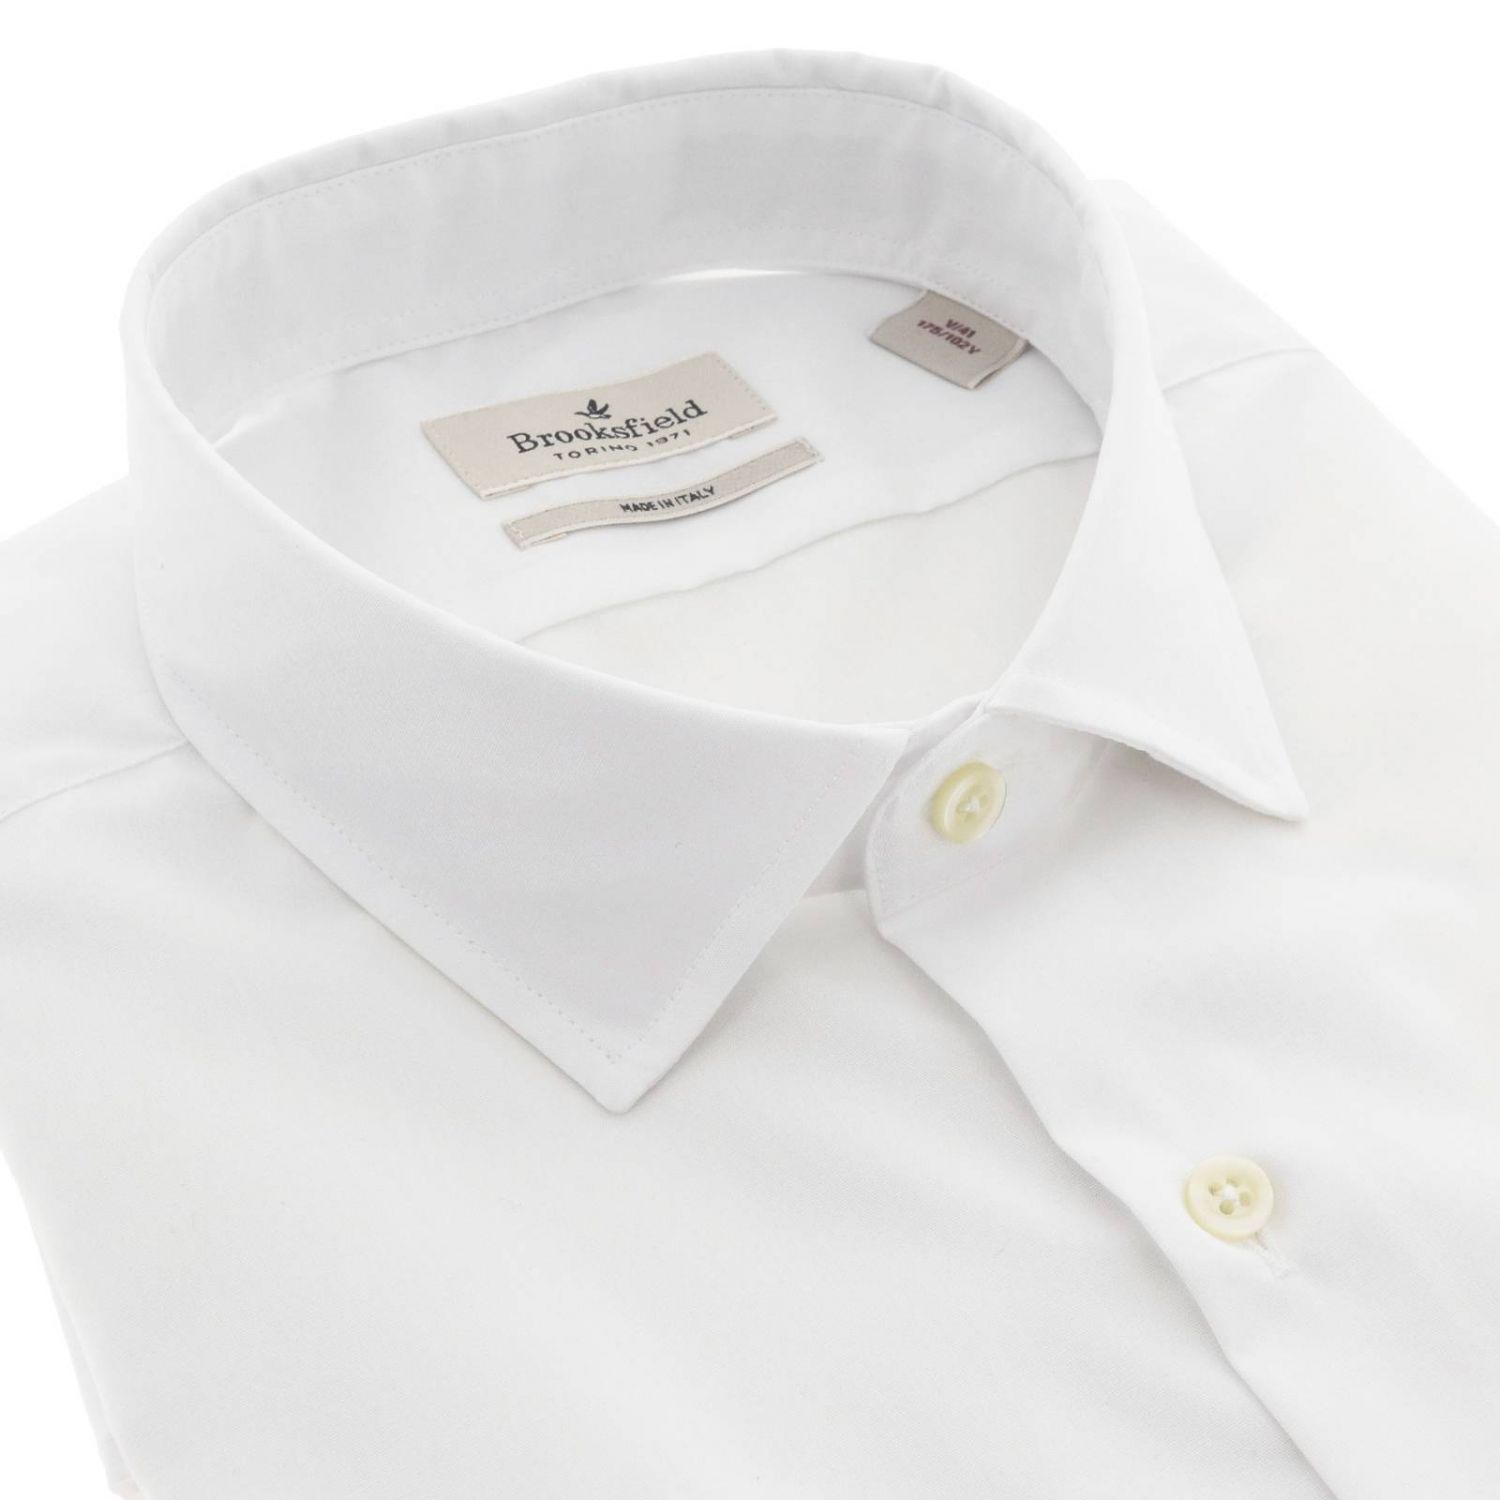 Brooksfield Outlet: Shirt men - White | Shirt Brooksfield 202A R016 ...